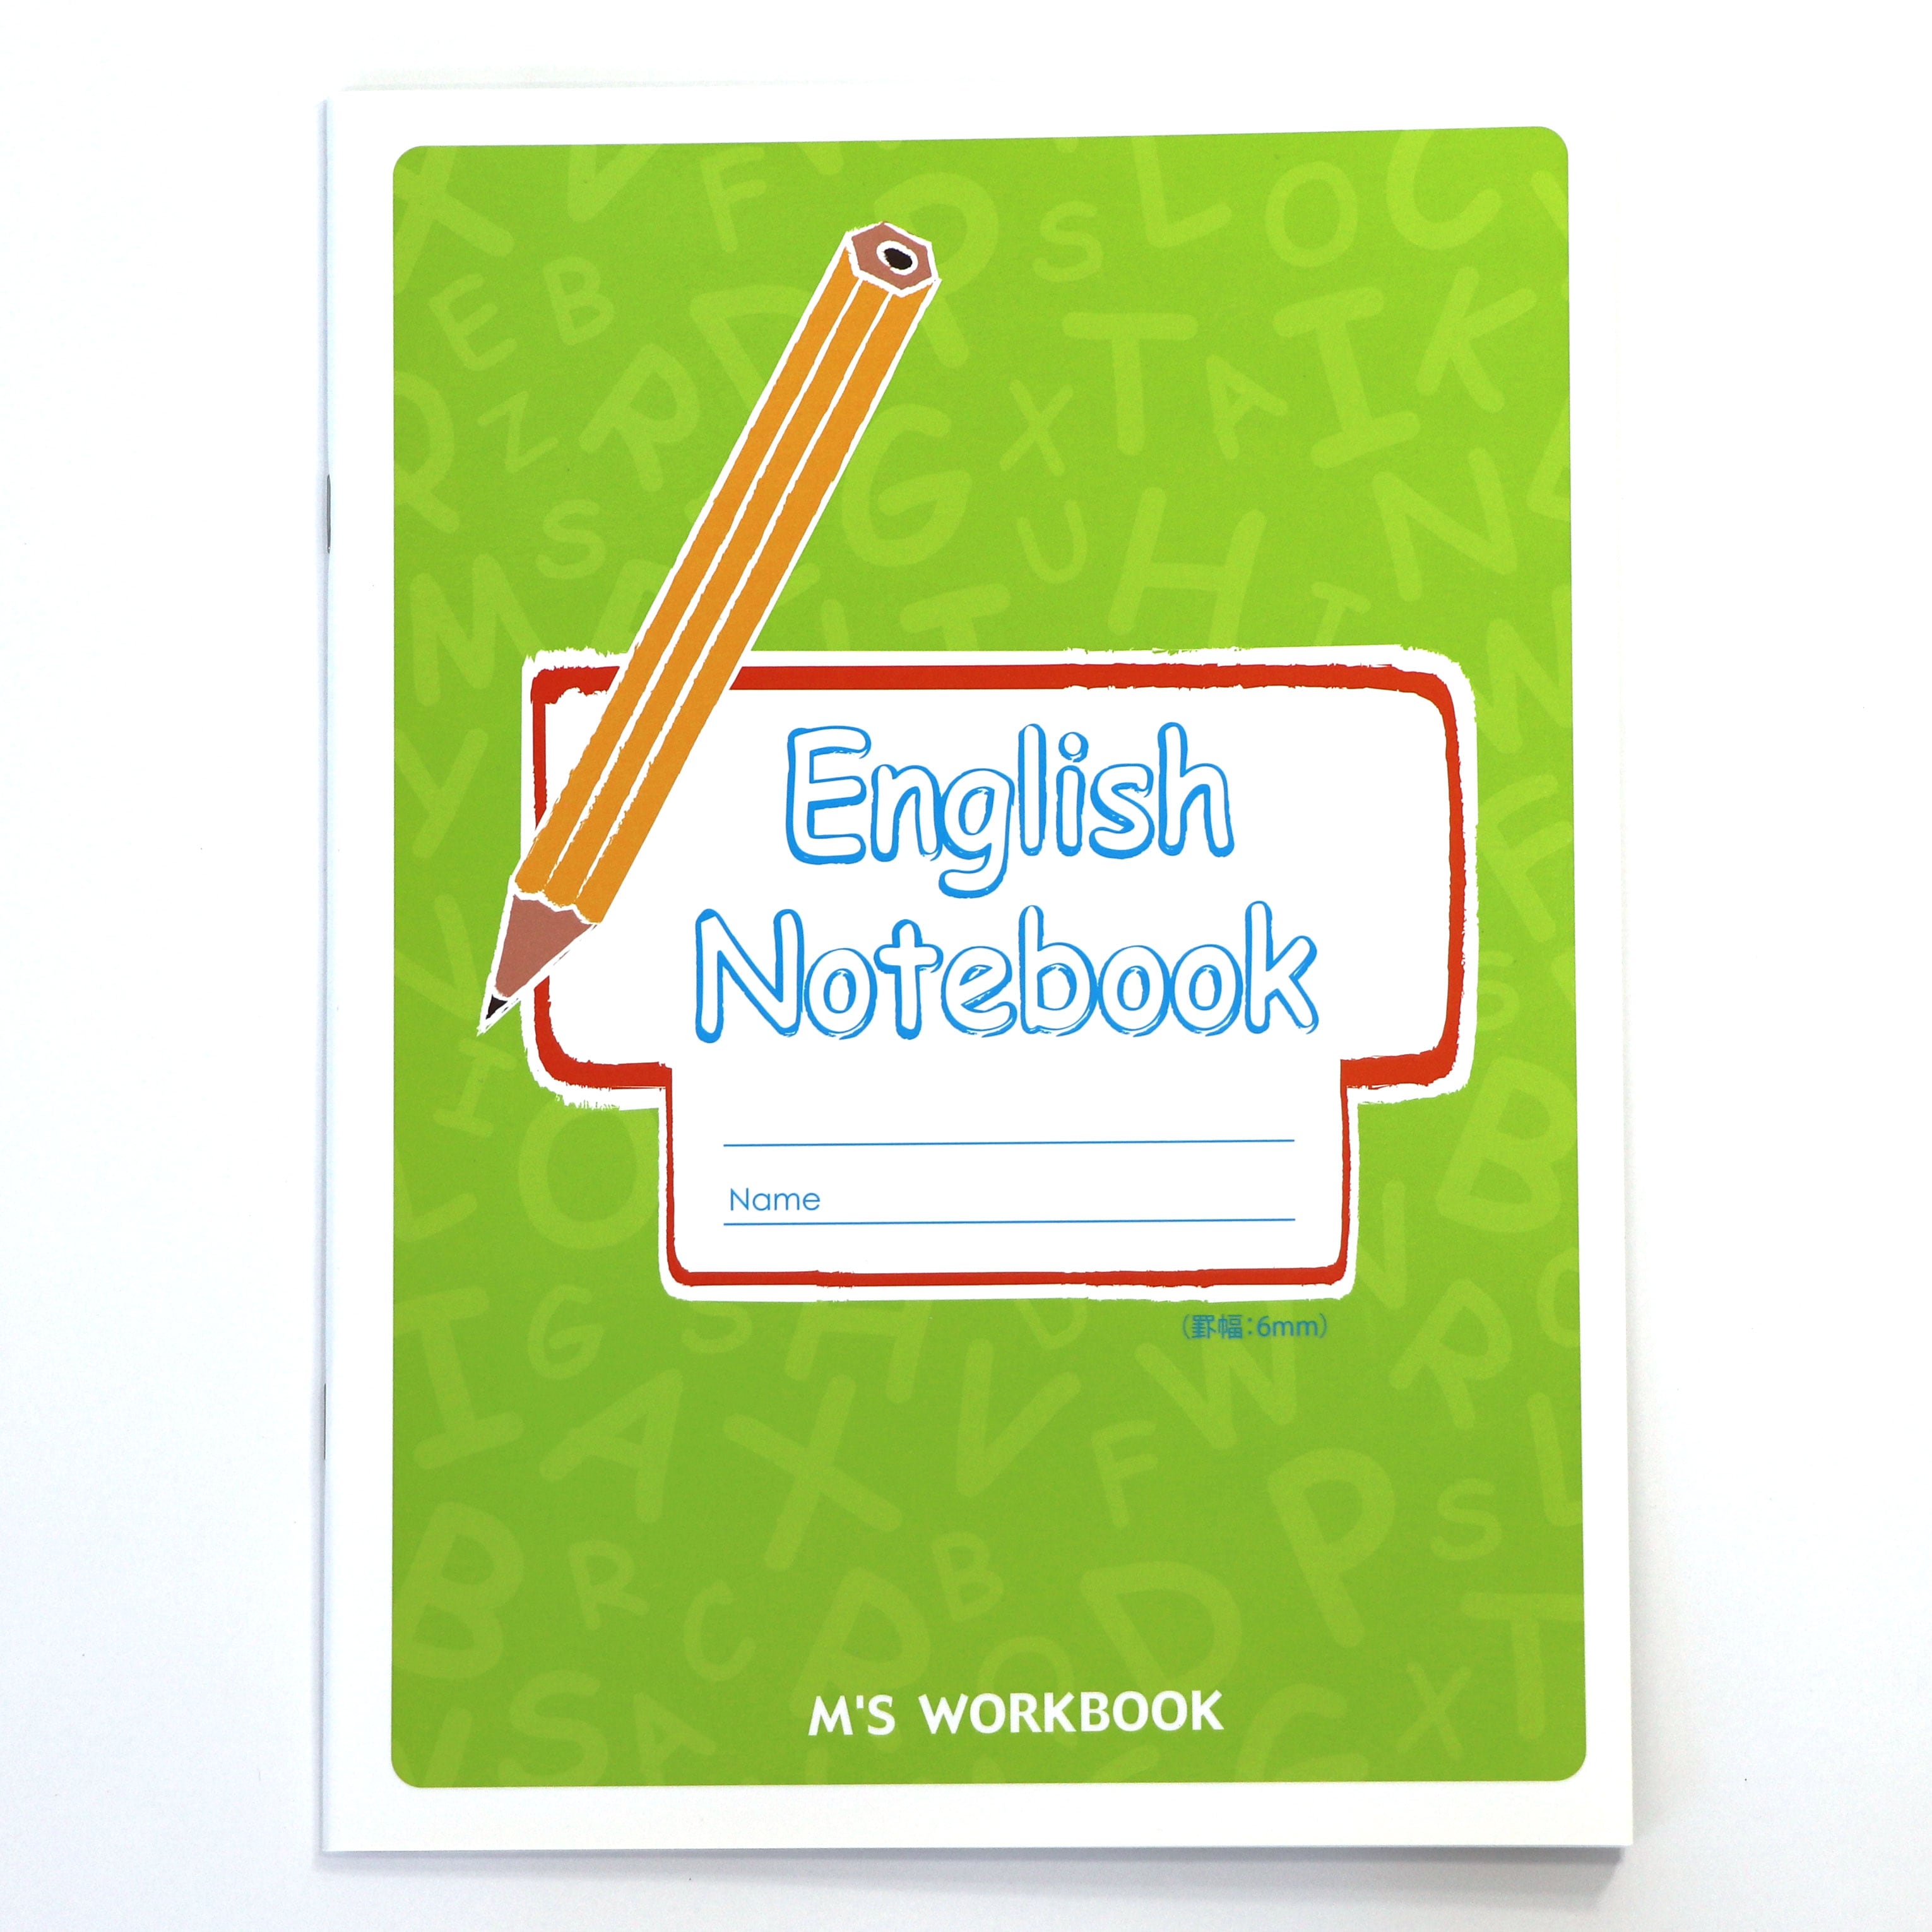 【English Notebook(6mm)